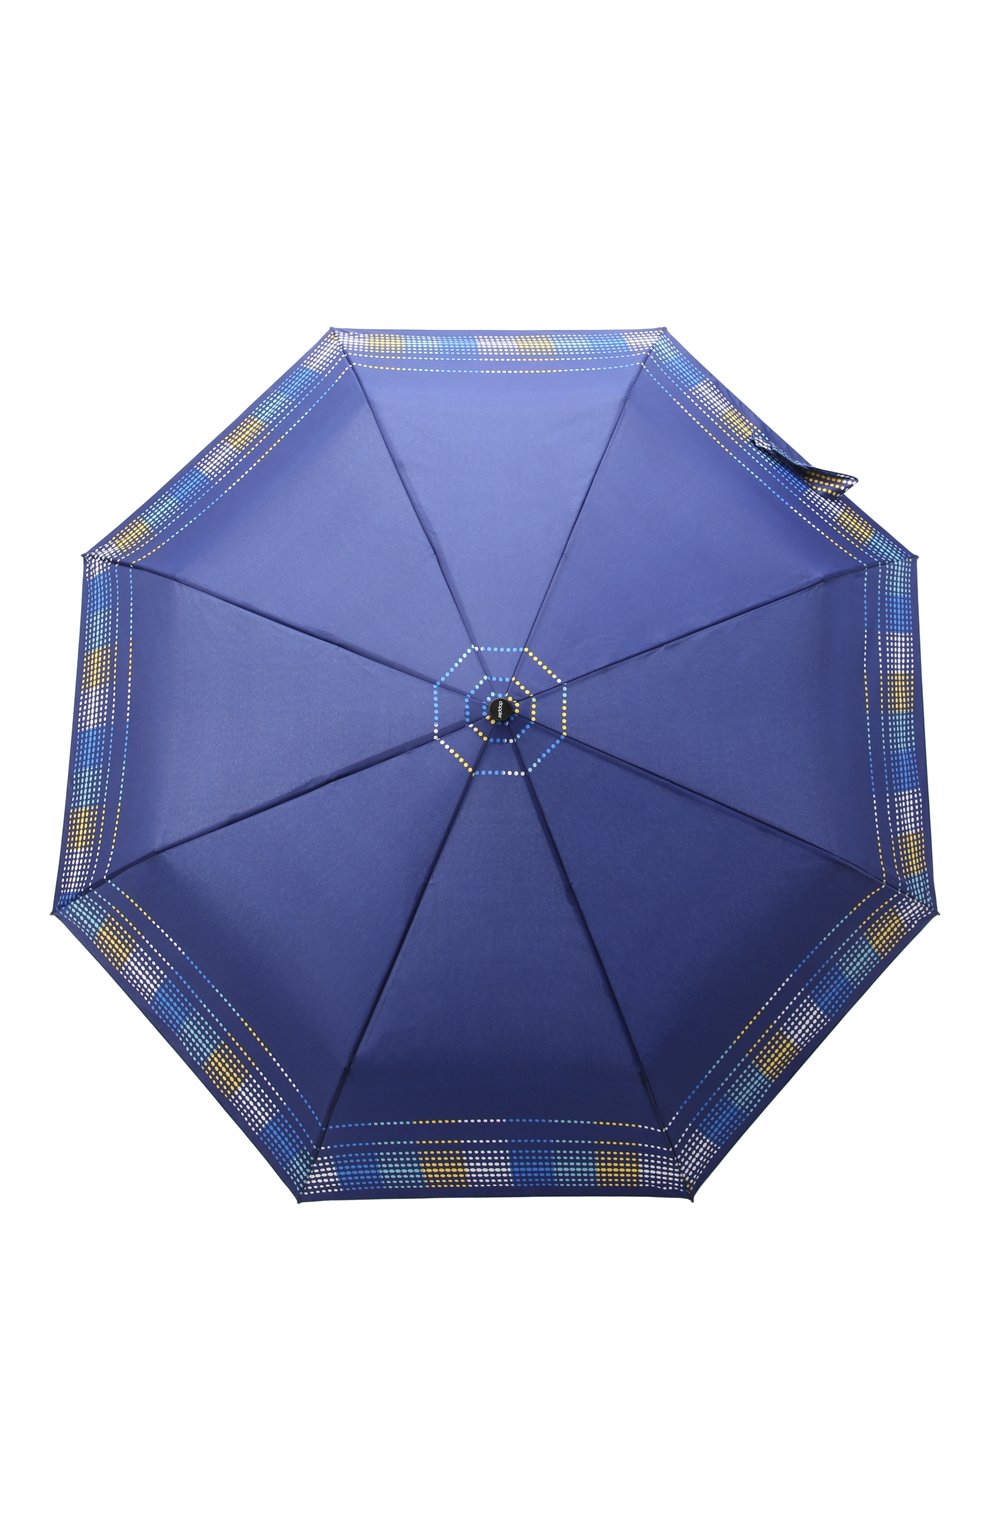 Женский складной зонт DOPPLER синего цвета, арт. 7441465A01 | Фото 1 (Материал: Текстиль, Синтетический материал)